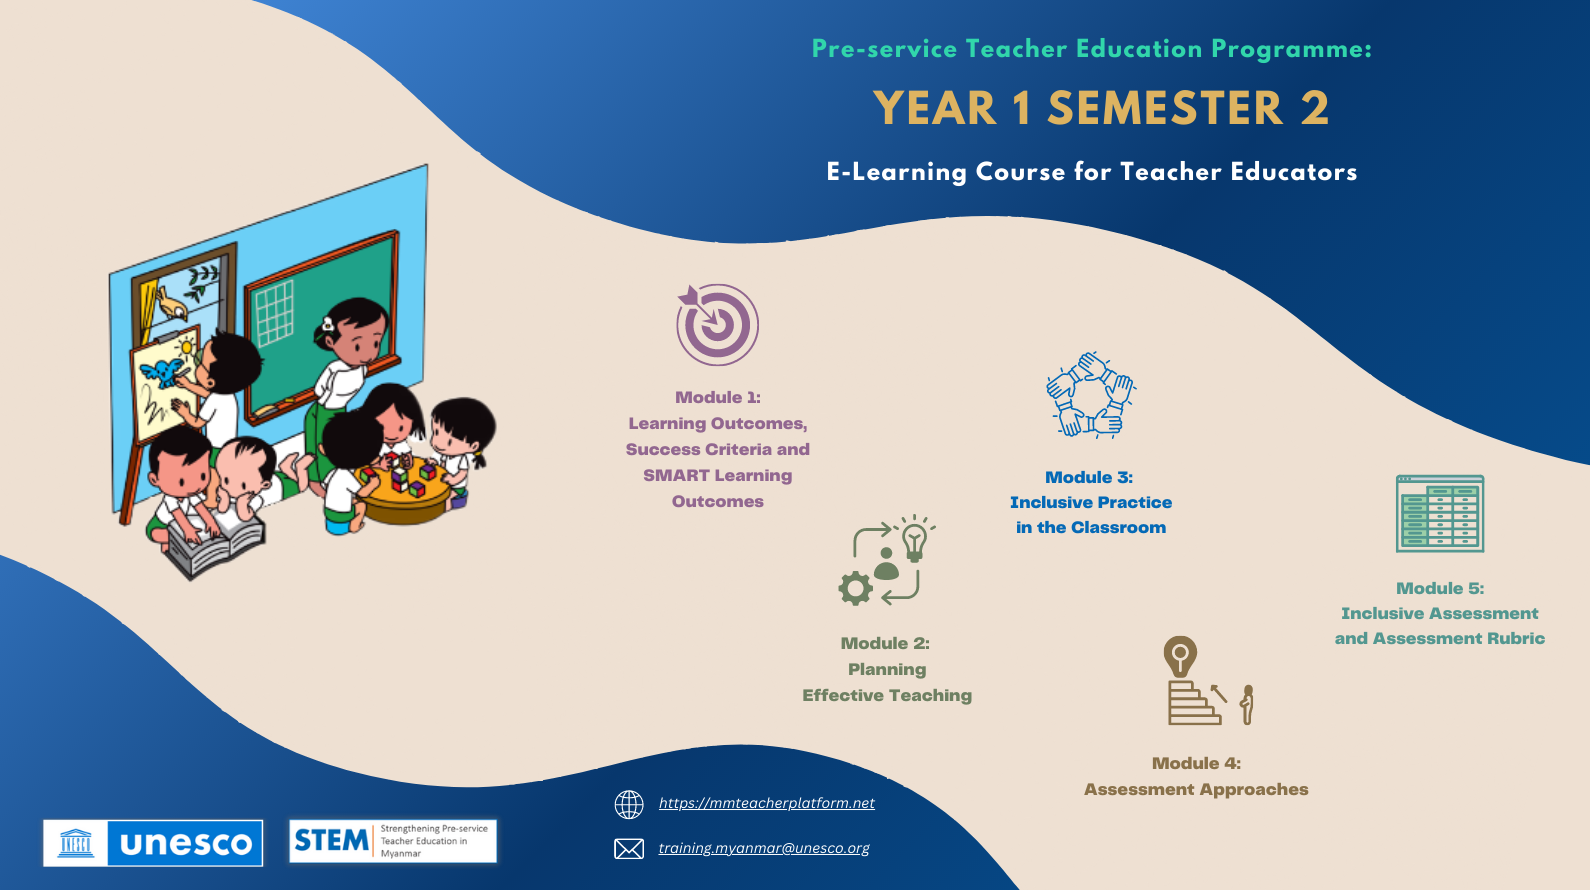 Pre-service Teacher Education Programme: Year 1 Semester 2 E-Learning Course for Teacher Educators